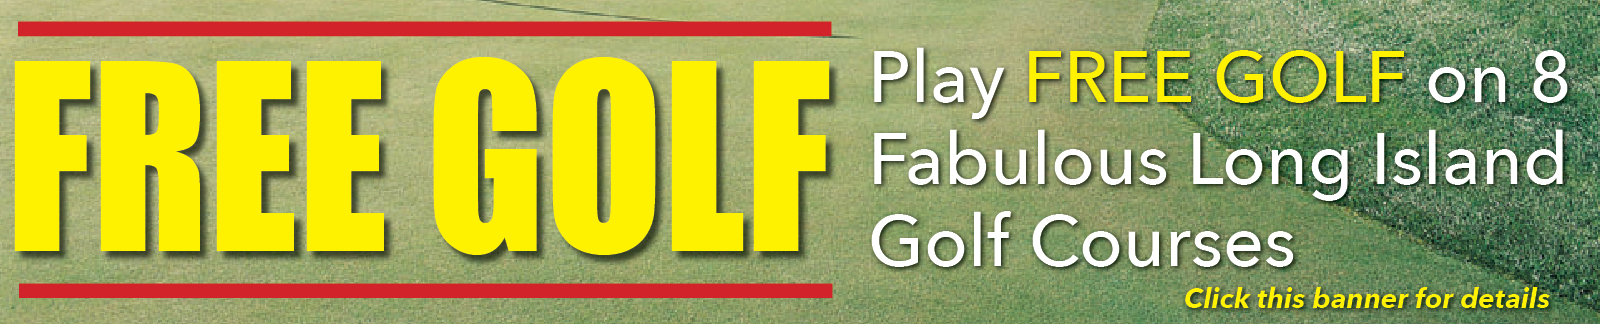 Play Free Golf Banner - Grass backround-PG